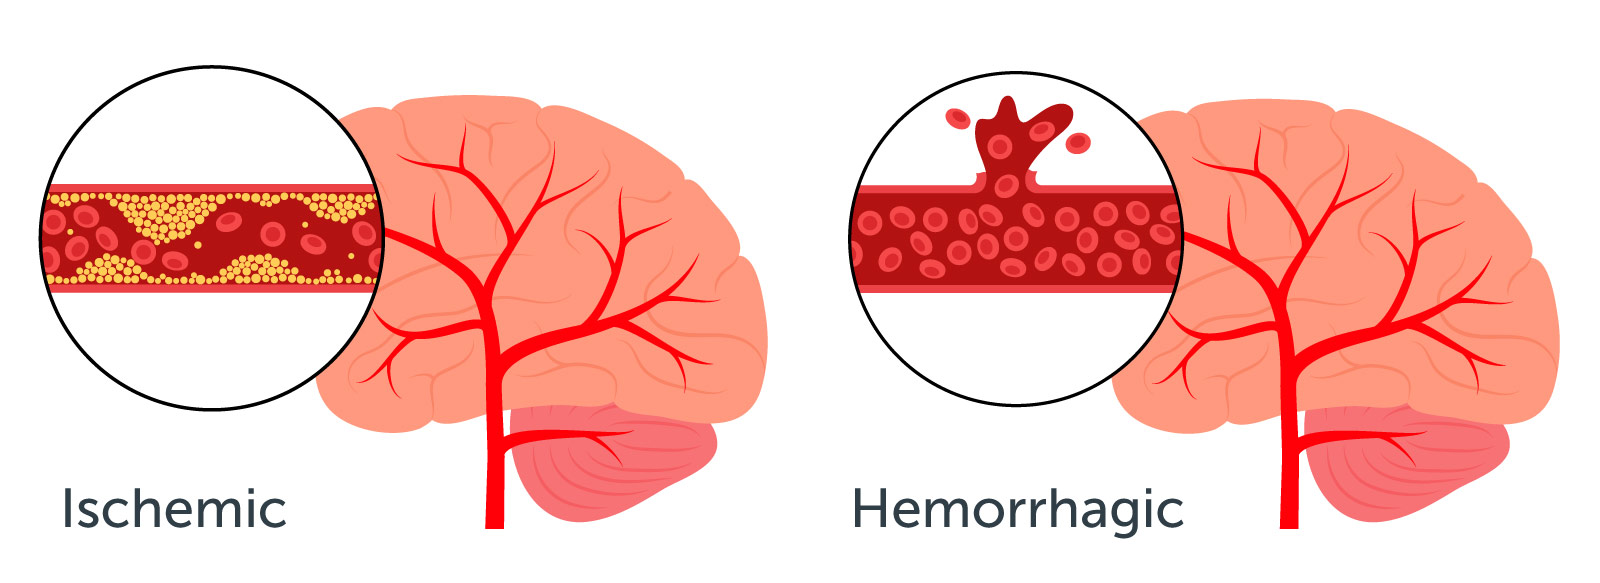 Ischemic and Hemorrhagic Stroke